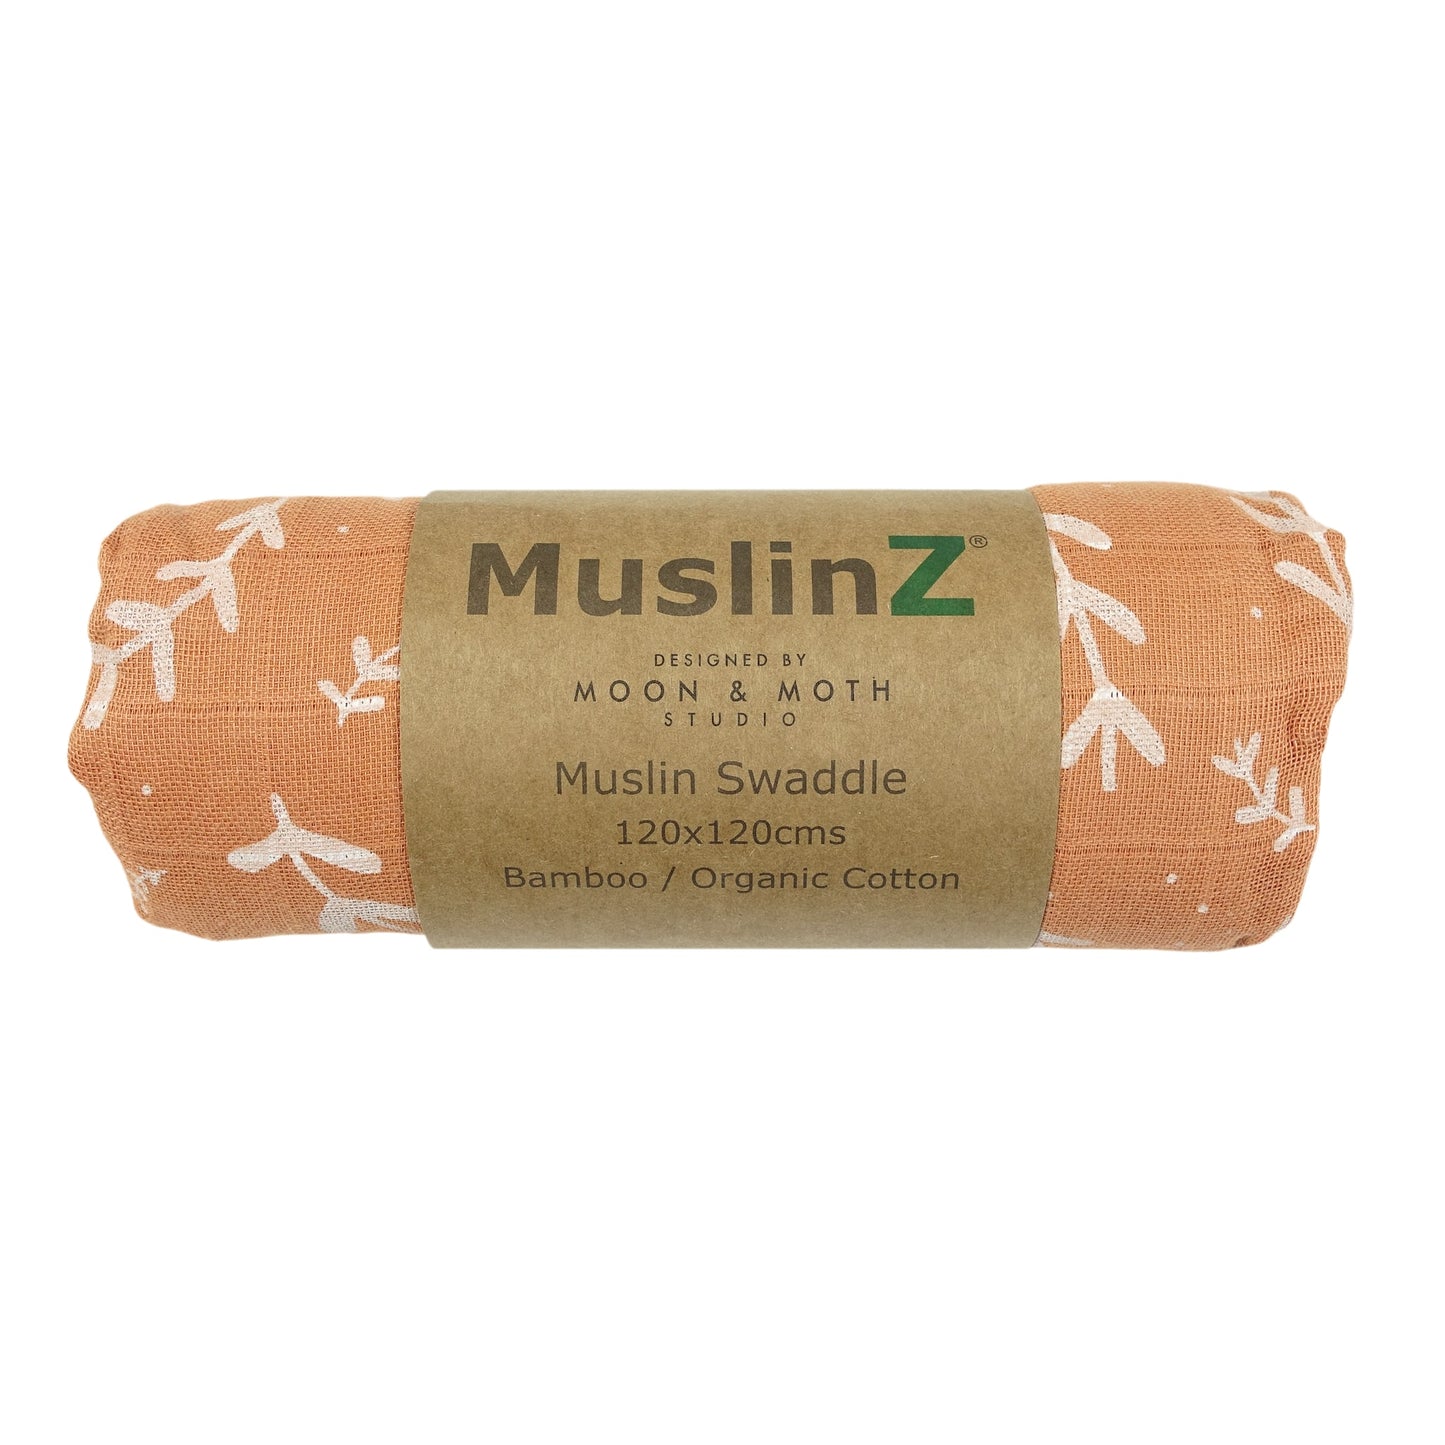 MuslinZ Bamboo/Organic Cotton Muslin Swaddle Laurel Leaf